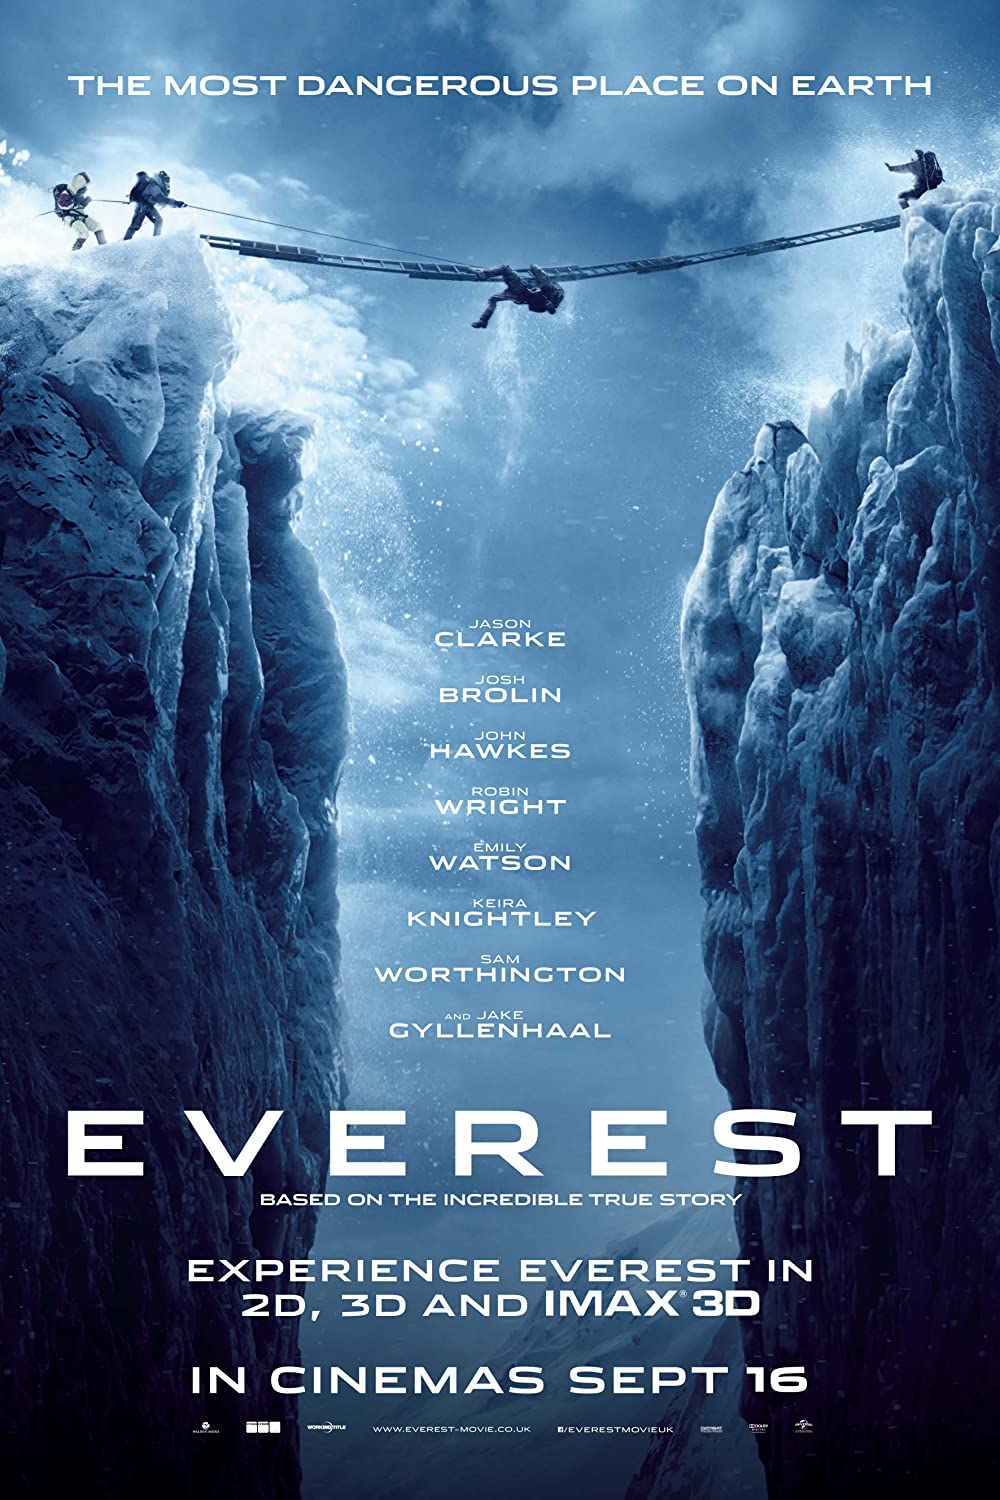 Stiahni si HD Filmy Everest / Everest (2015)(1080p)(CZ/EN/HU) = CSFD 76%